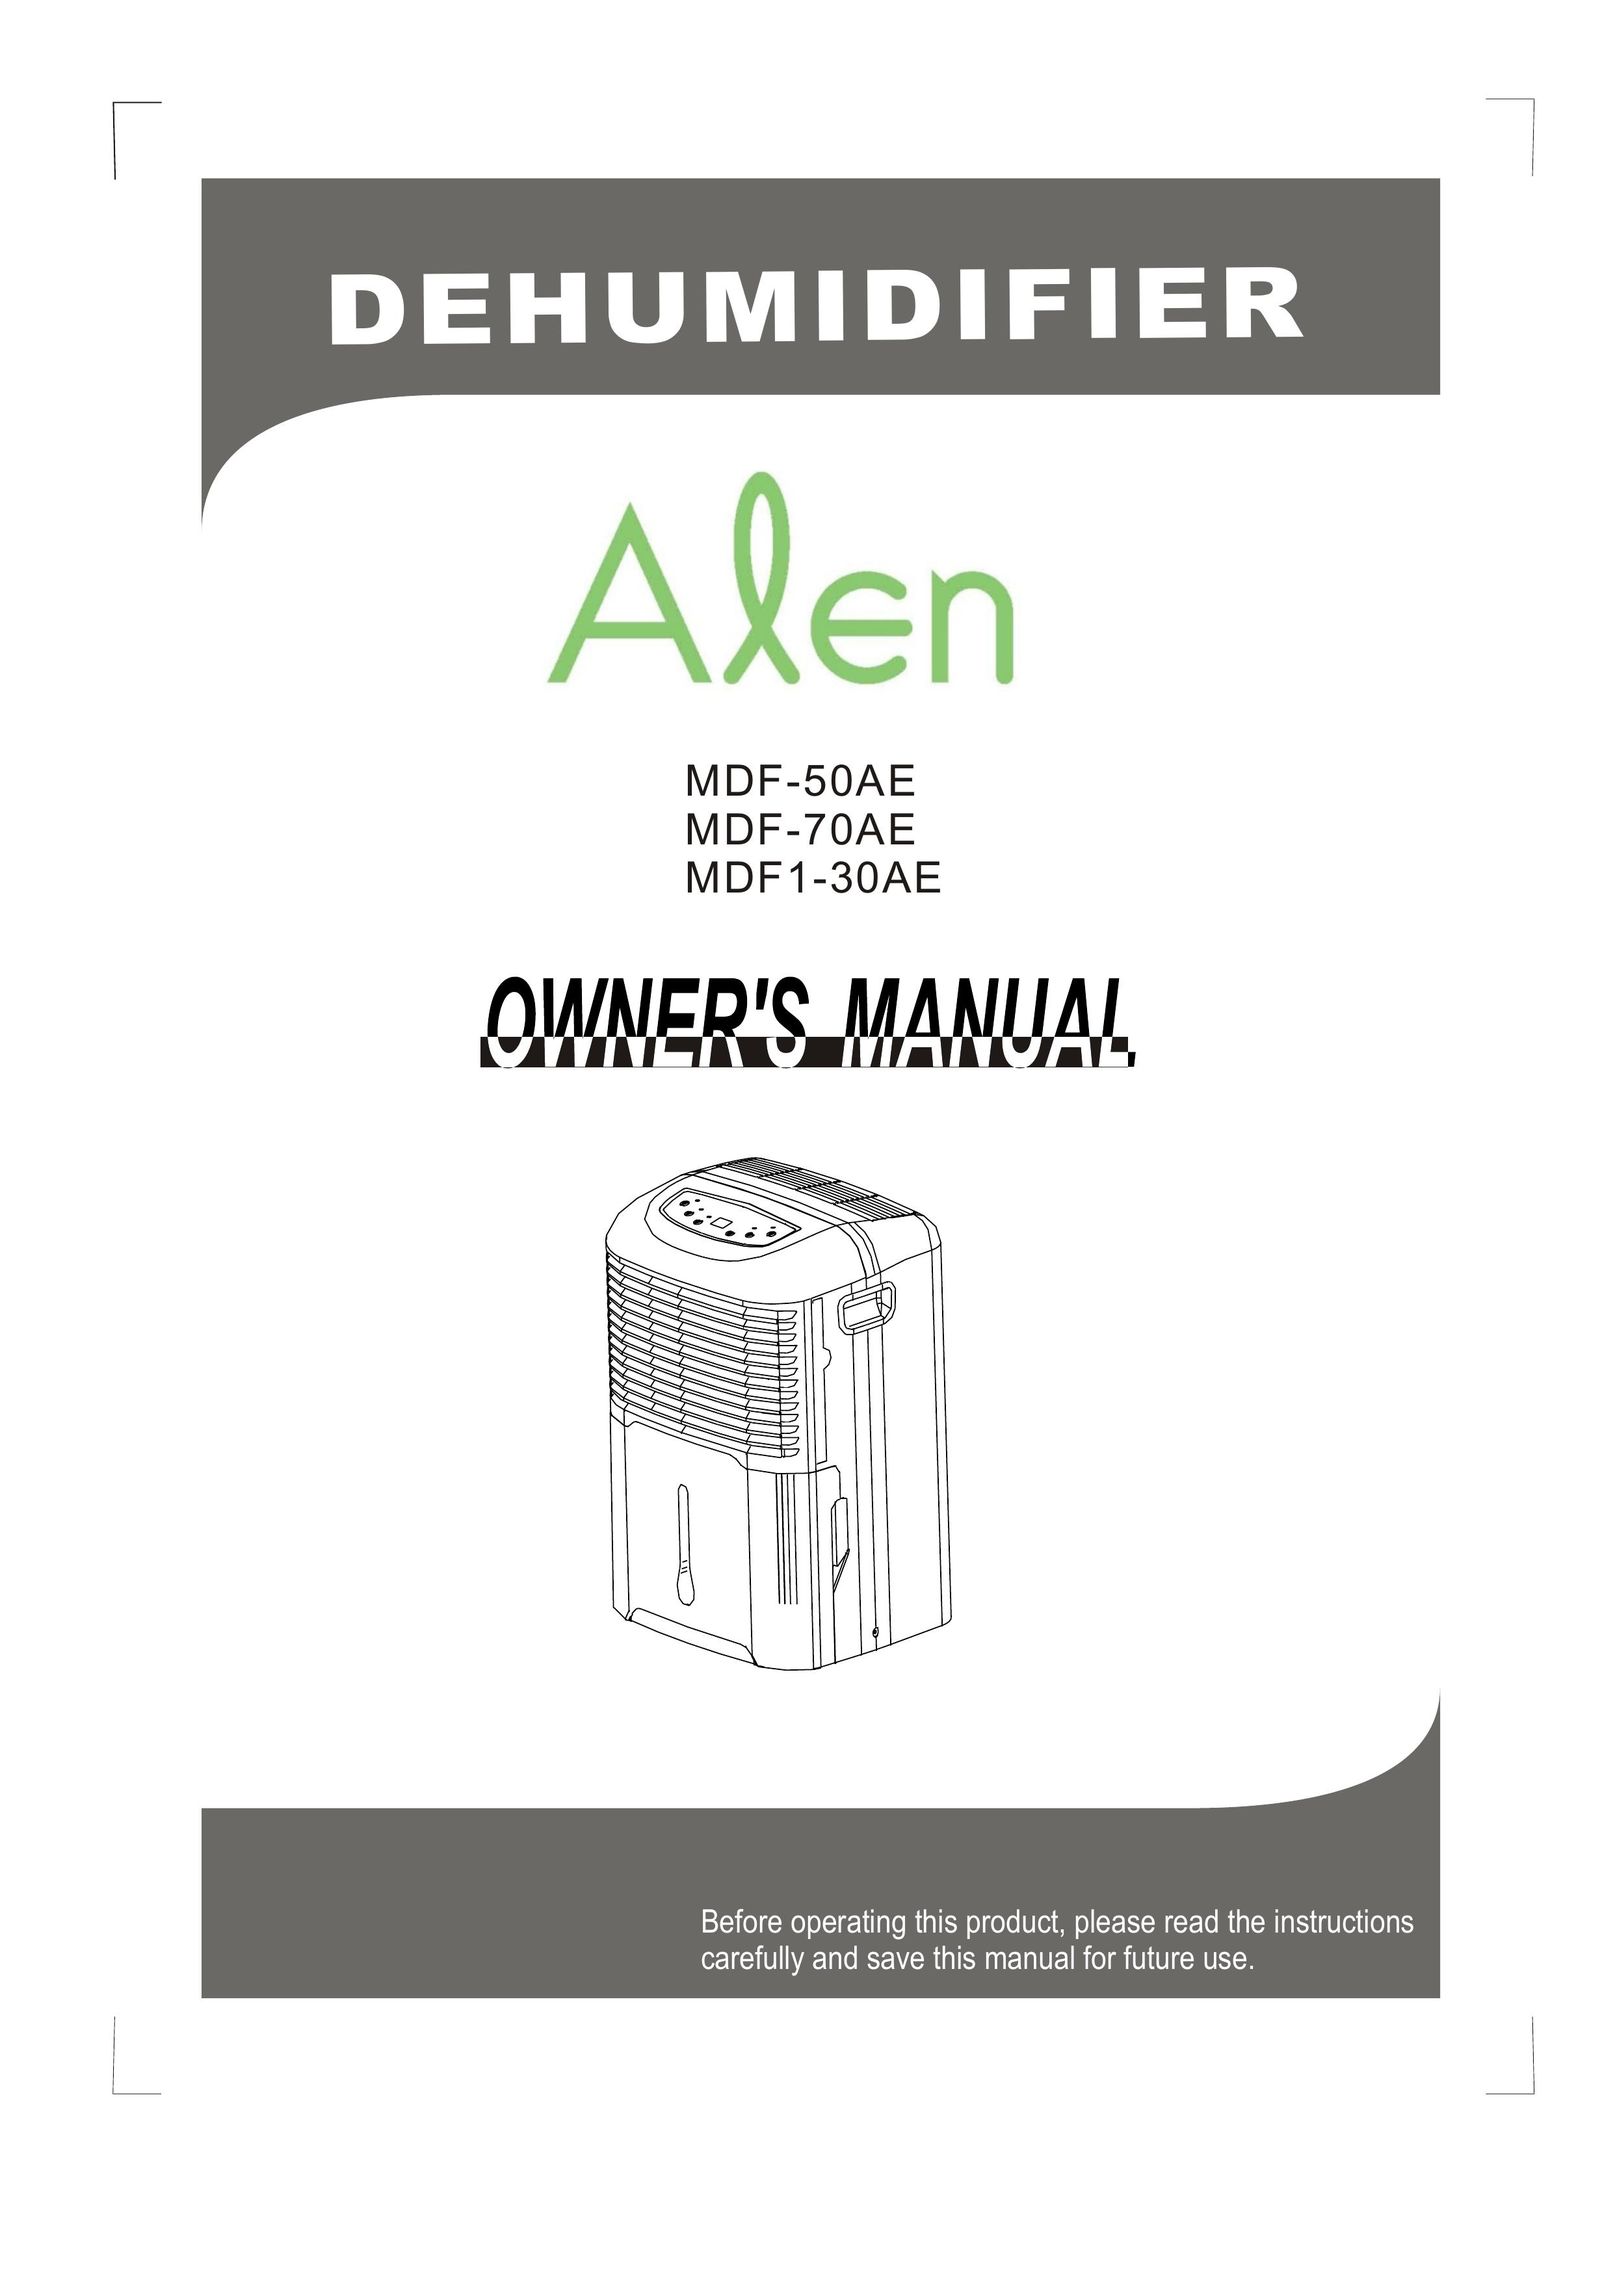 Alen MDF1-30AE Dehumidifier User Manual